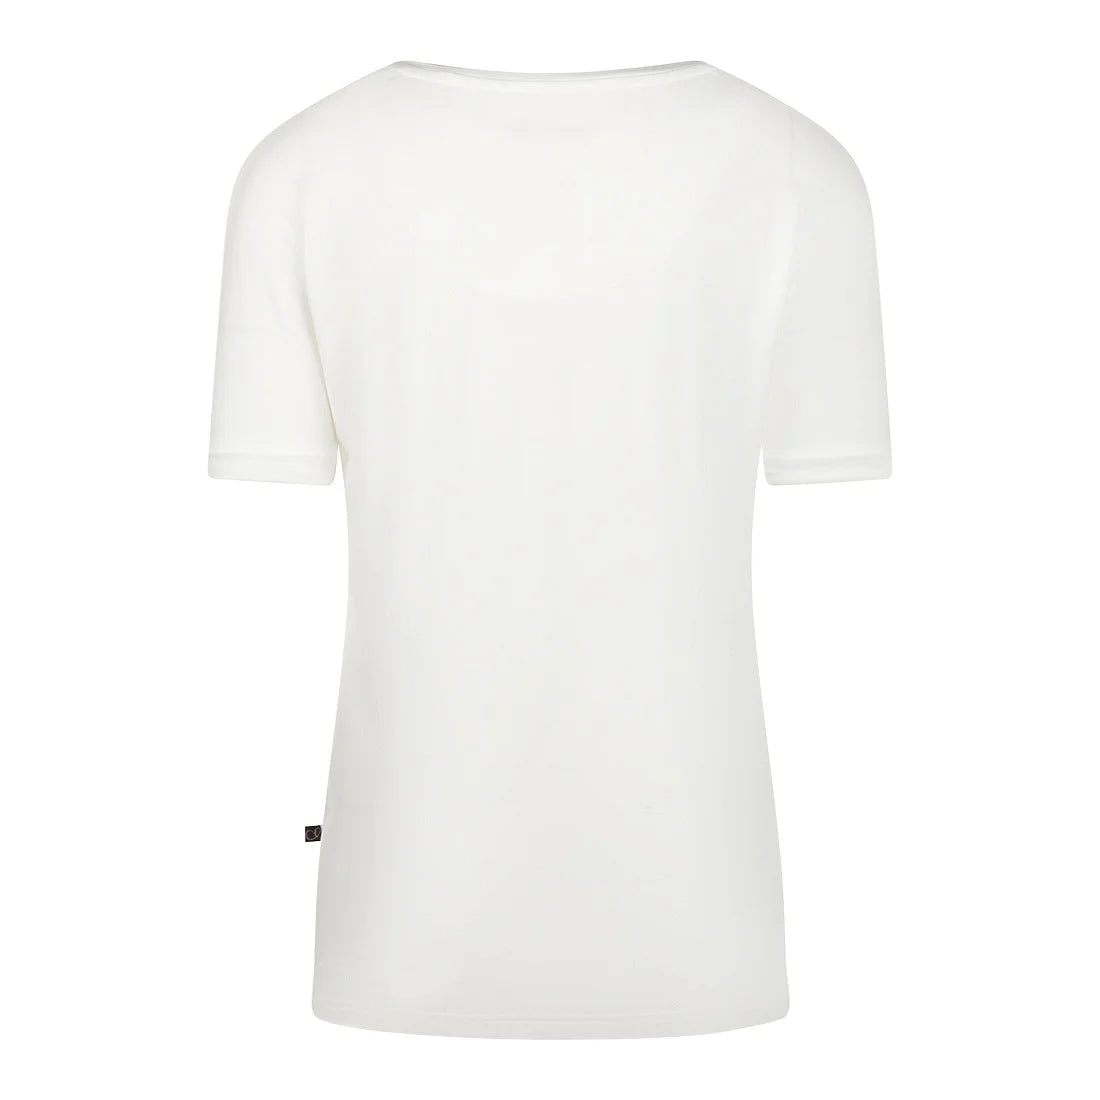 Charlie Choe Dames Pyjama T-shirt - R51112-38 - Off-white